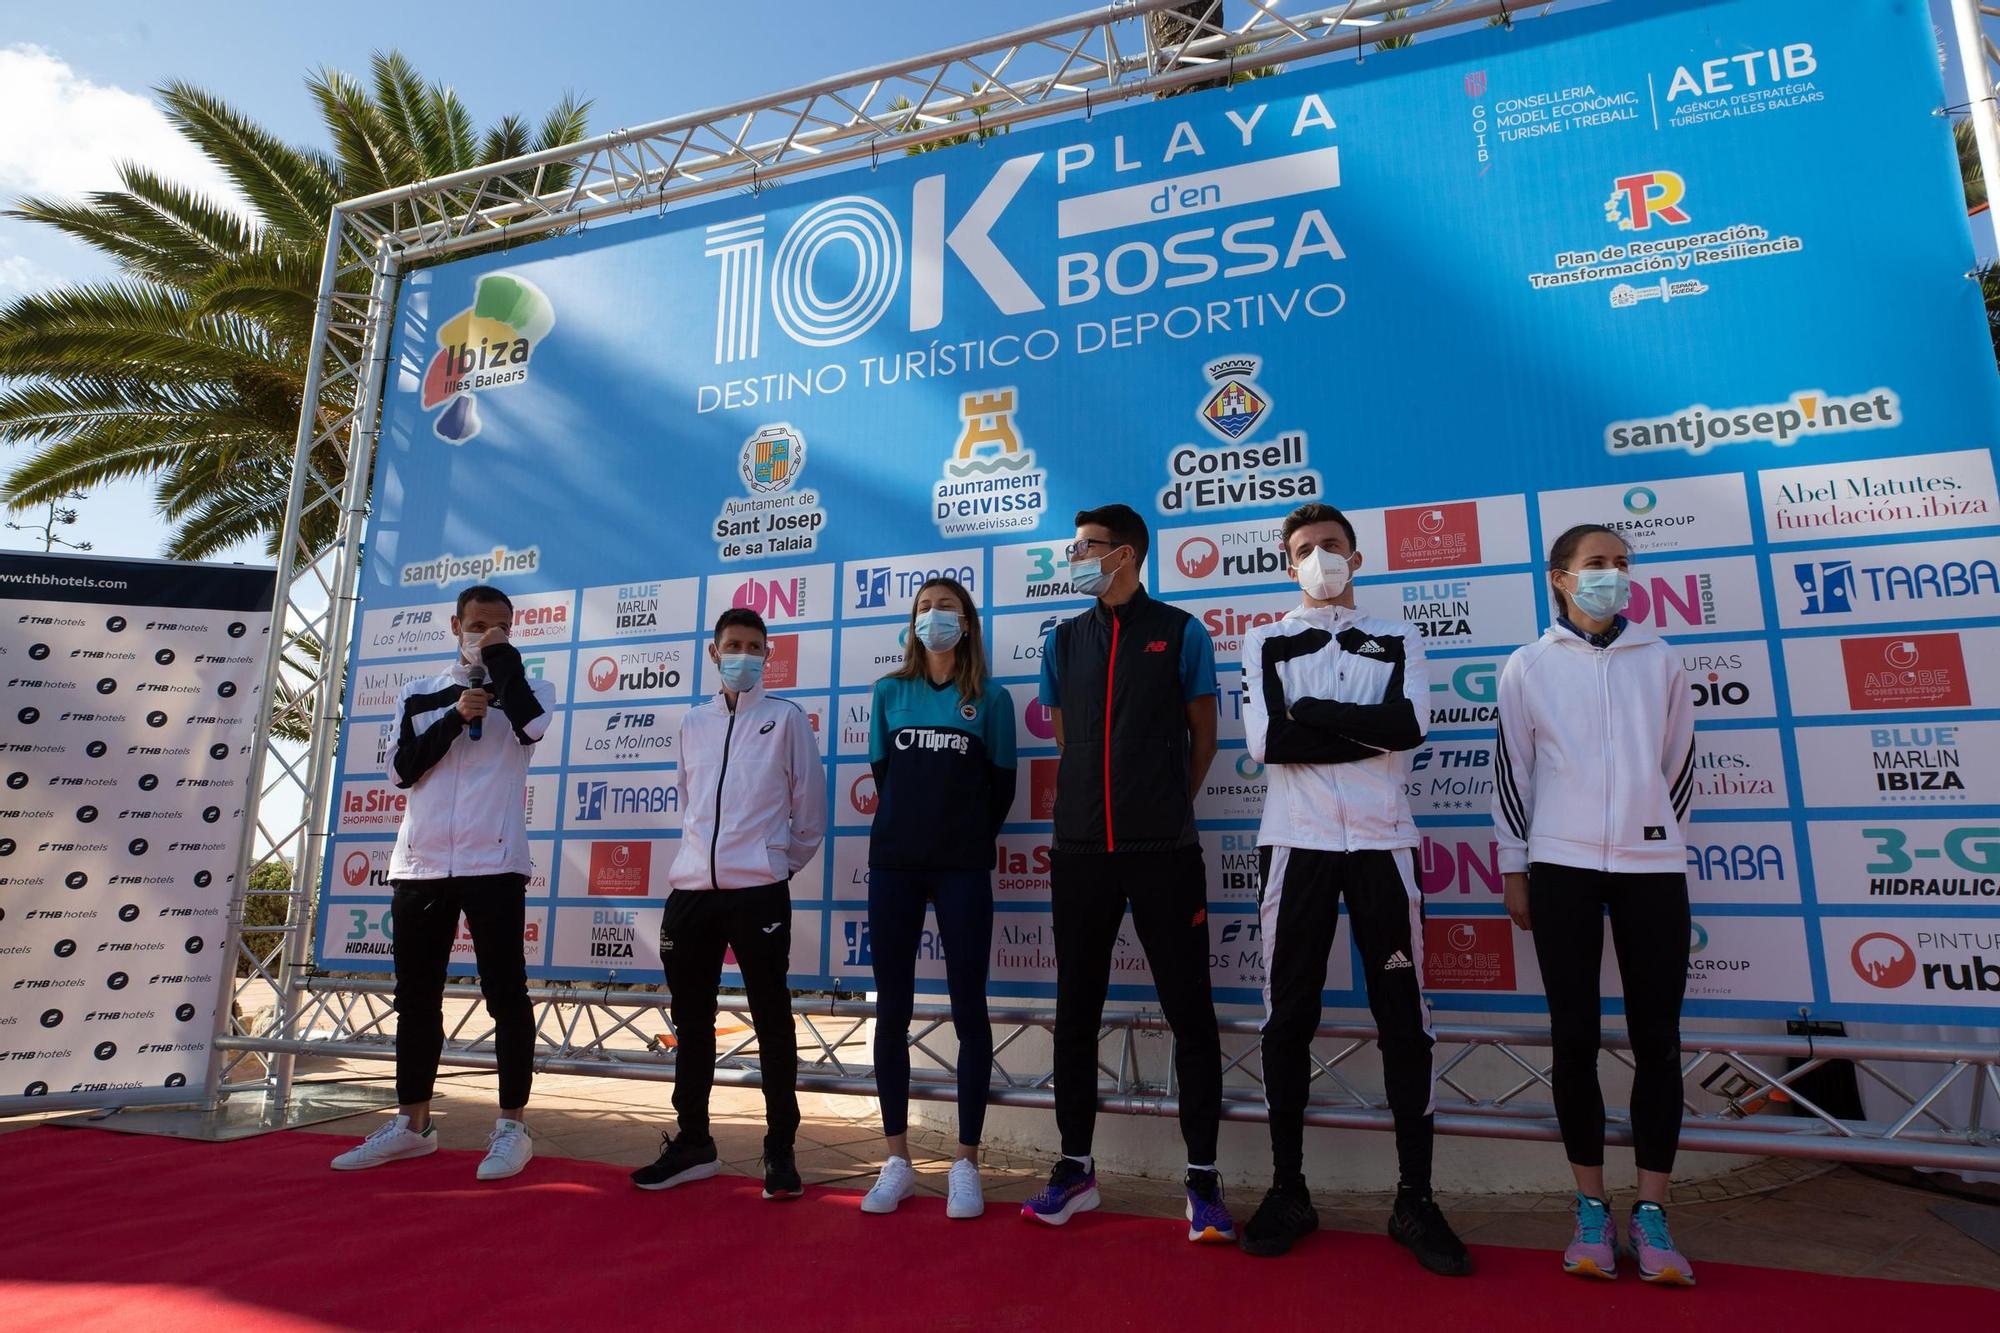 Presentación de la carrera 10k de Platja d'en Bossa.